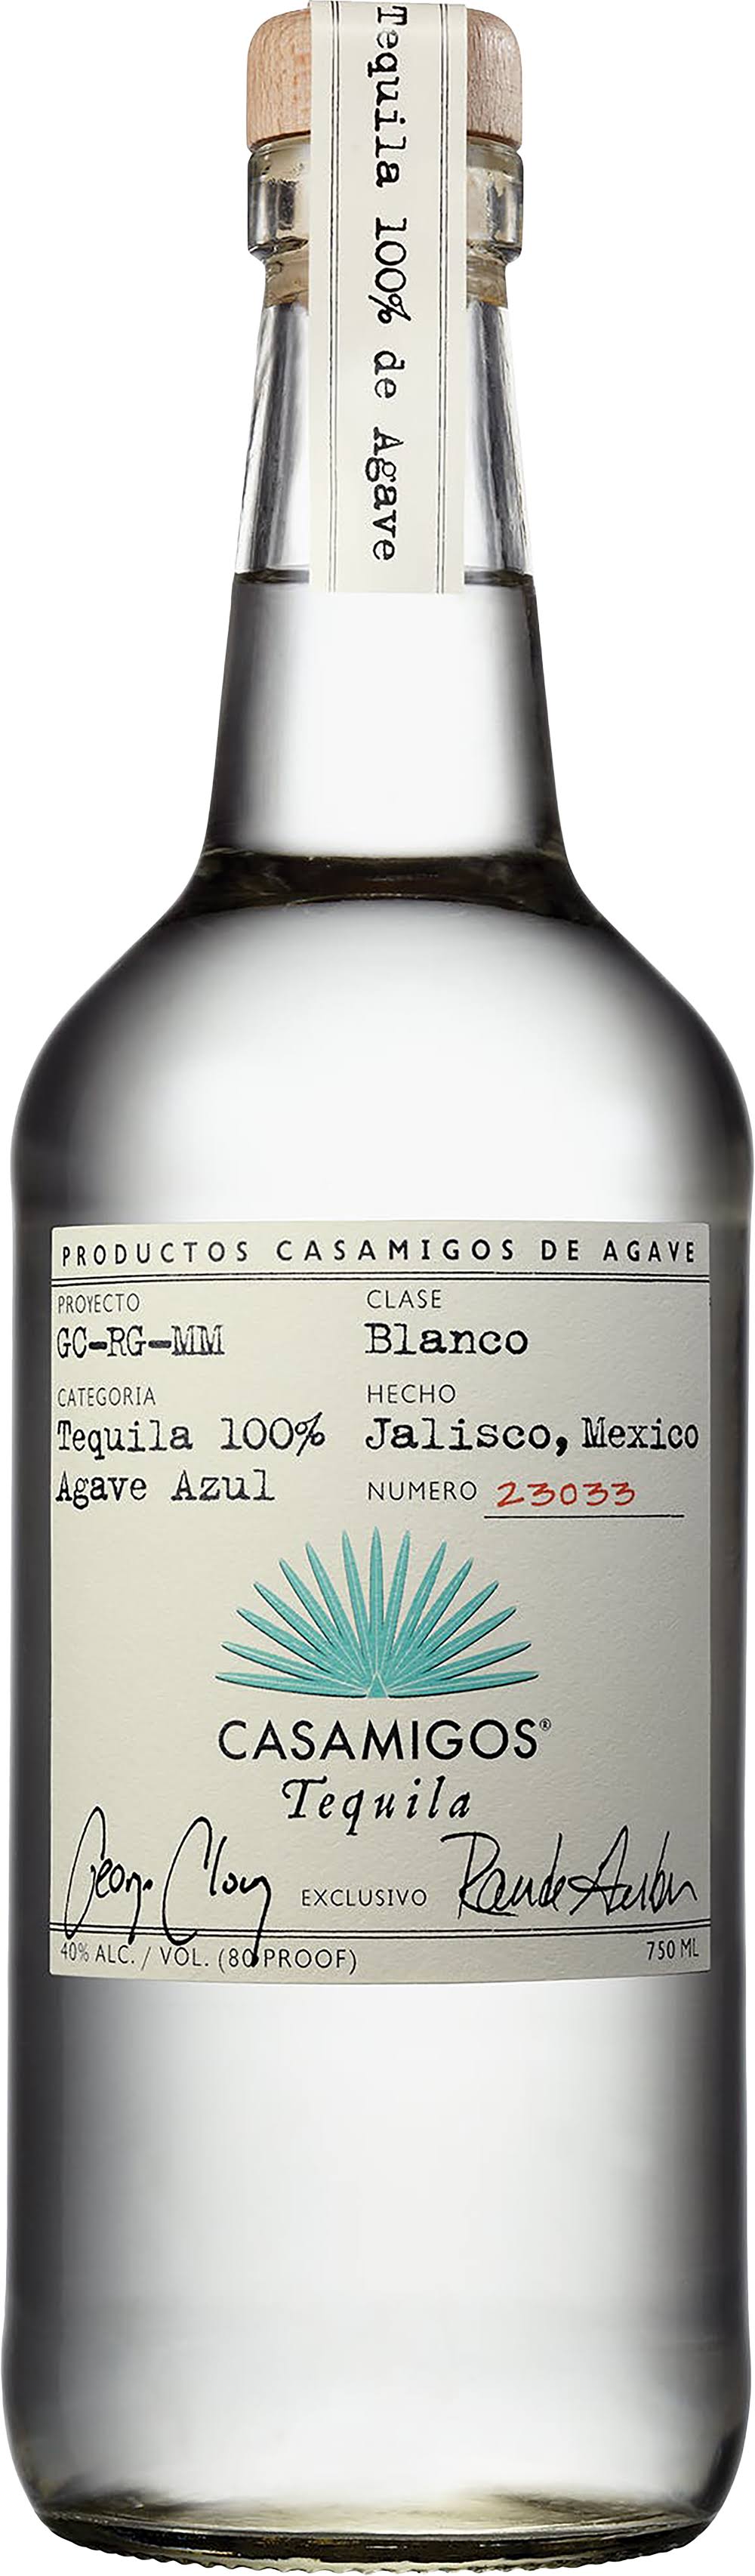 Casamigos Tequila, Blanco - 750 ml